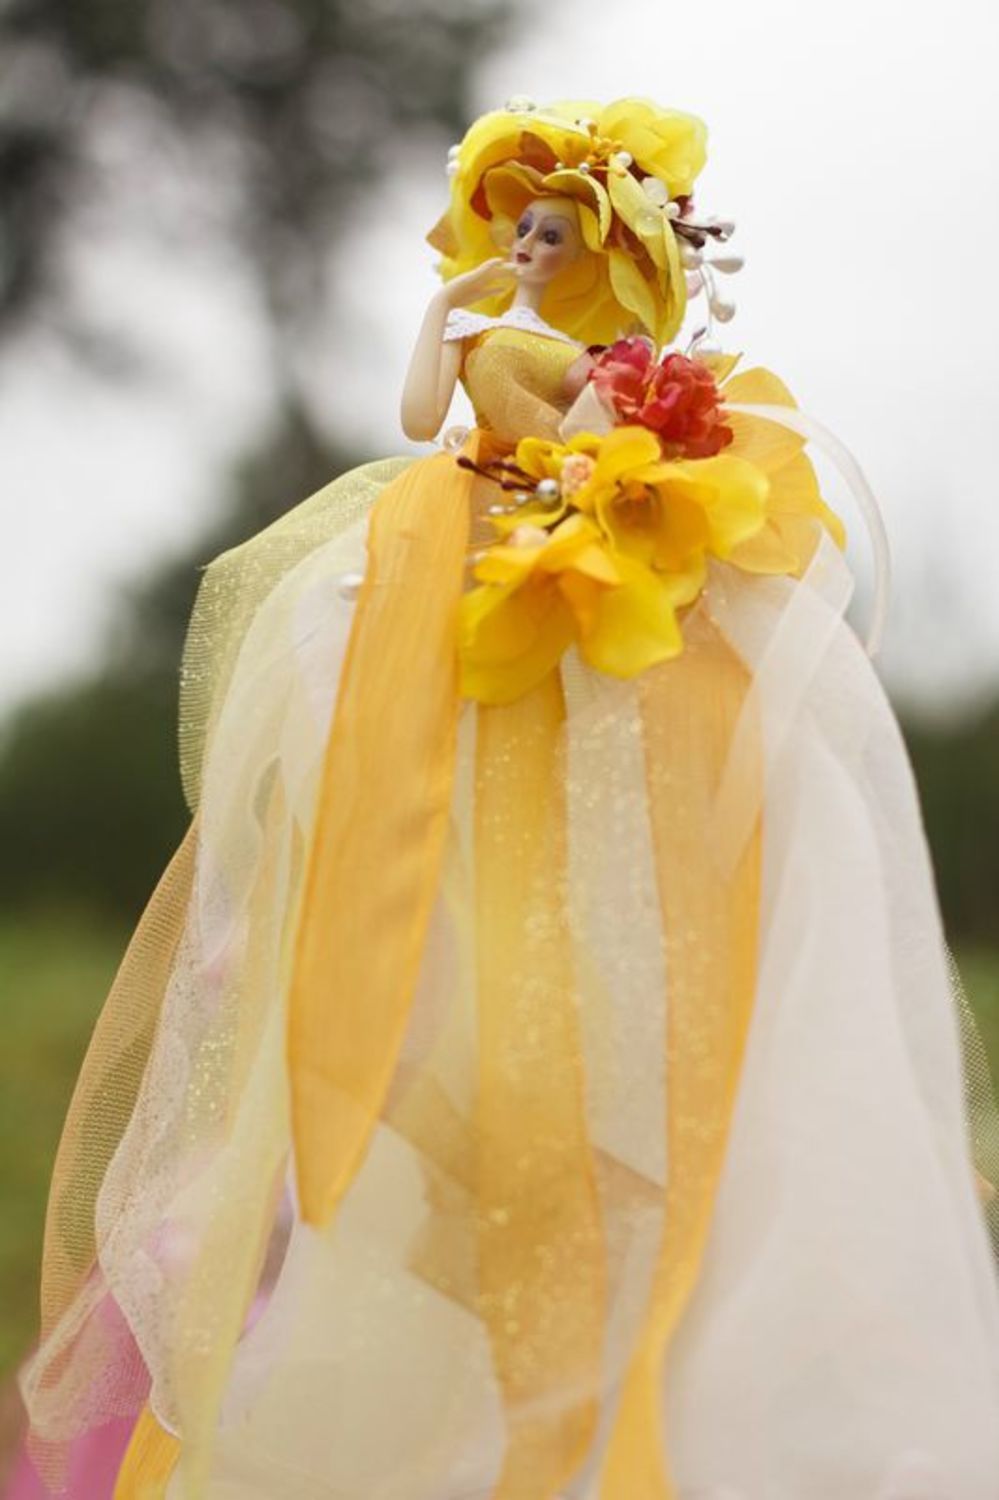 Poupée faite main pour mariage en robe jaune photo 5